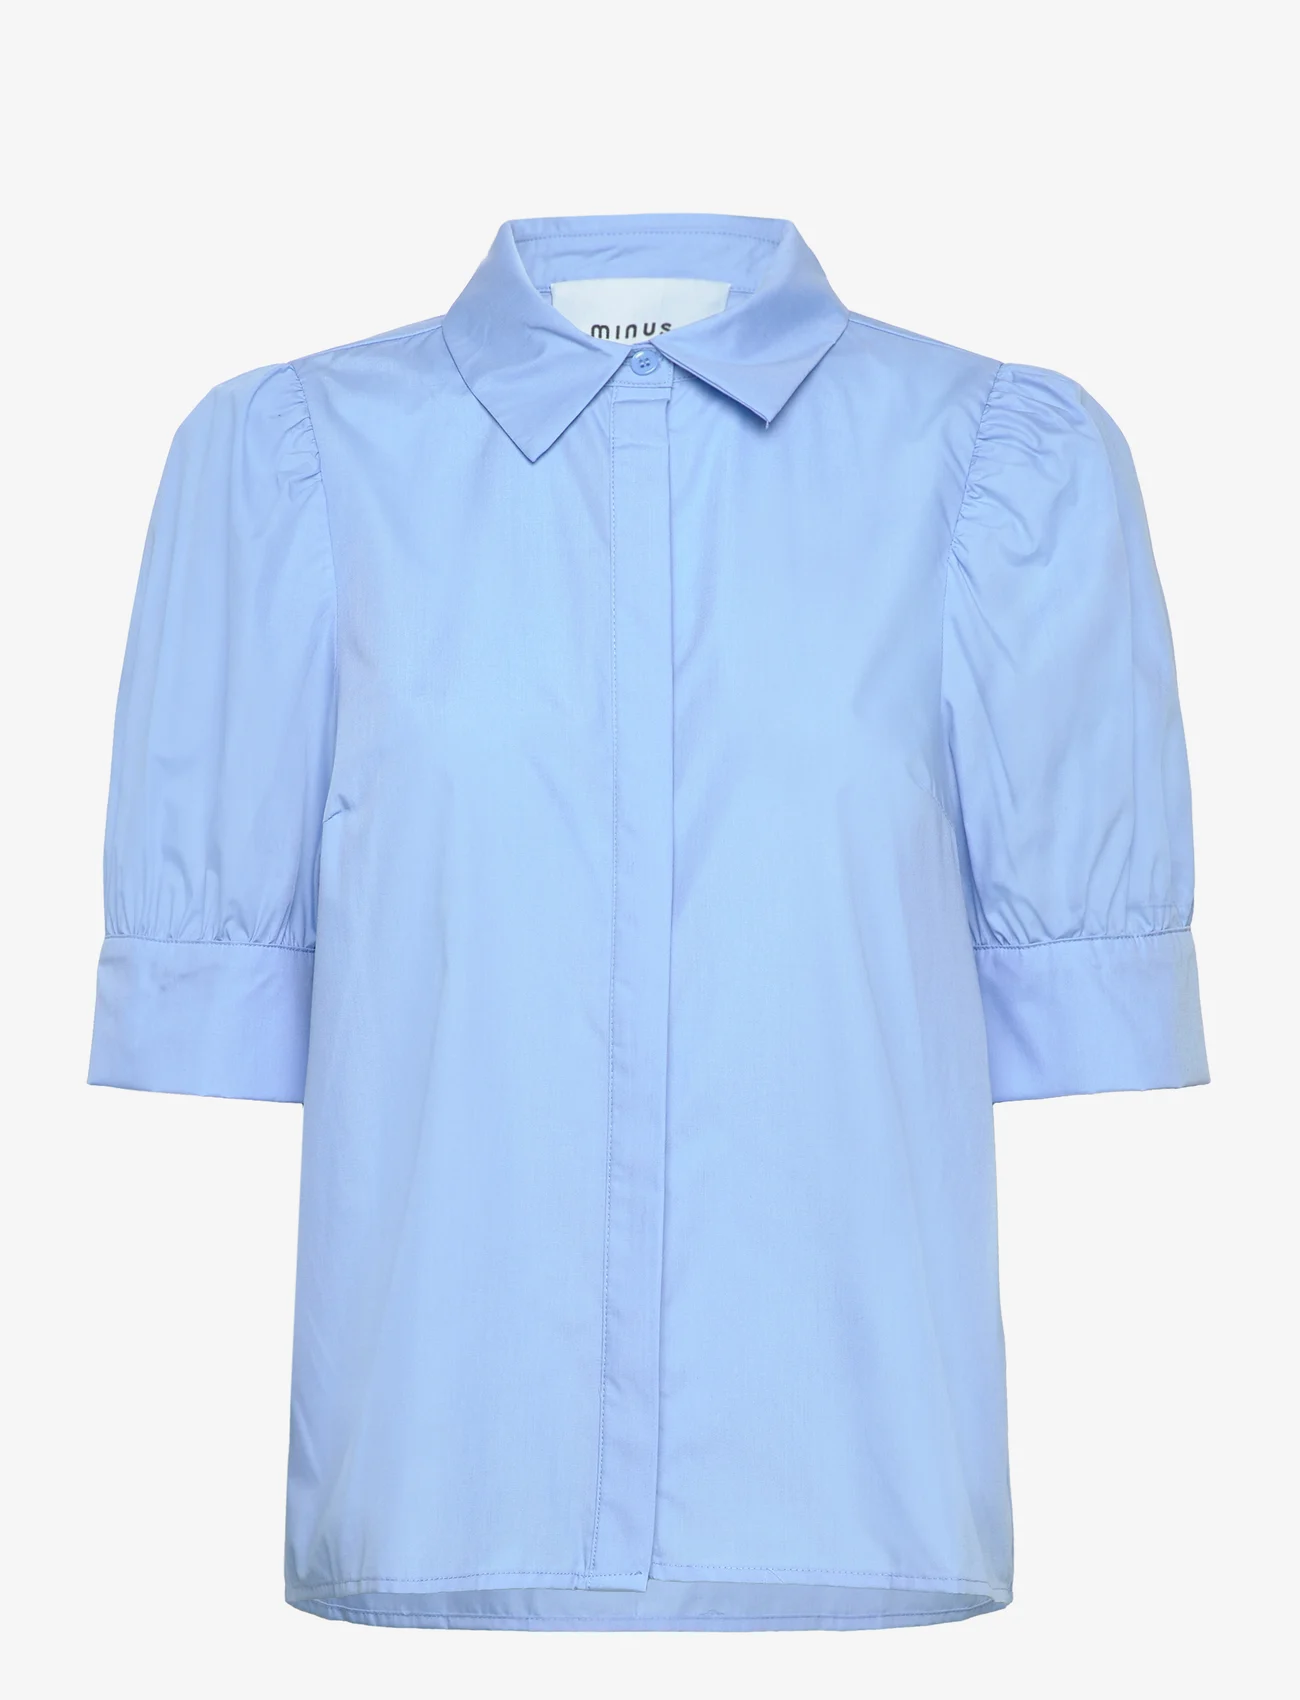 Minus - Molia Skjorte - overhemden met korte mouwen - blue bonnet - 0